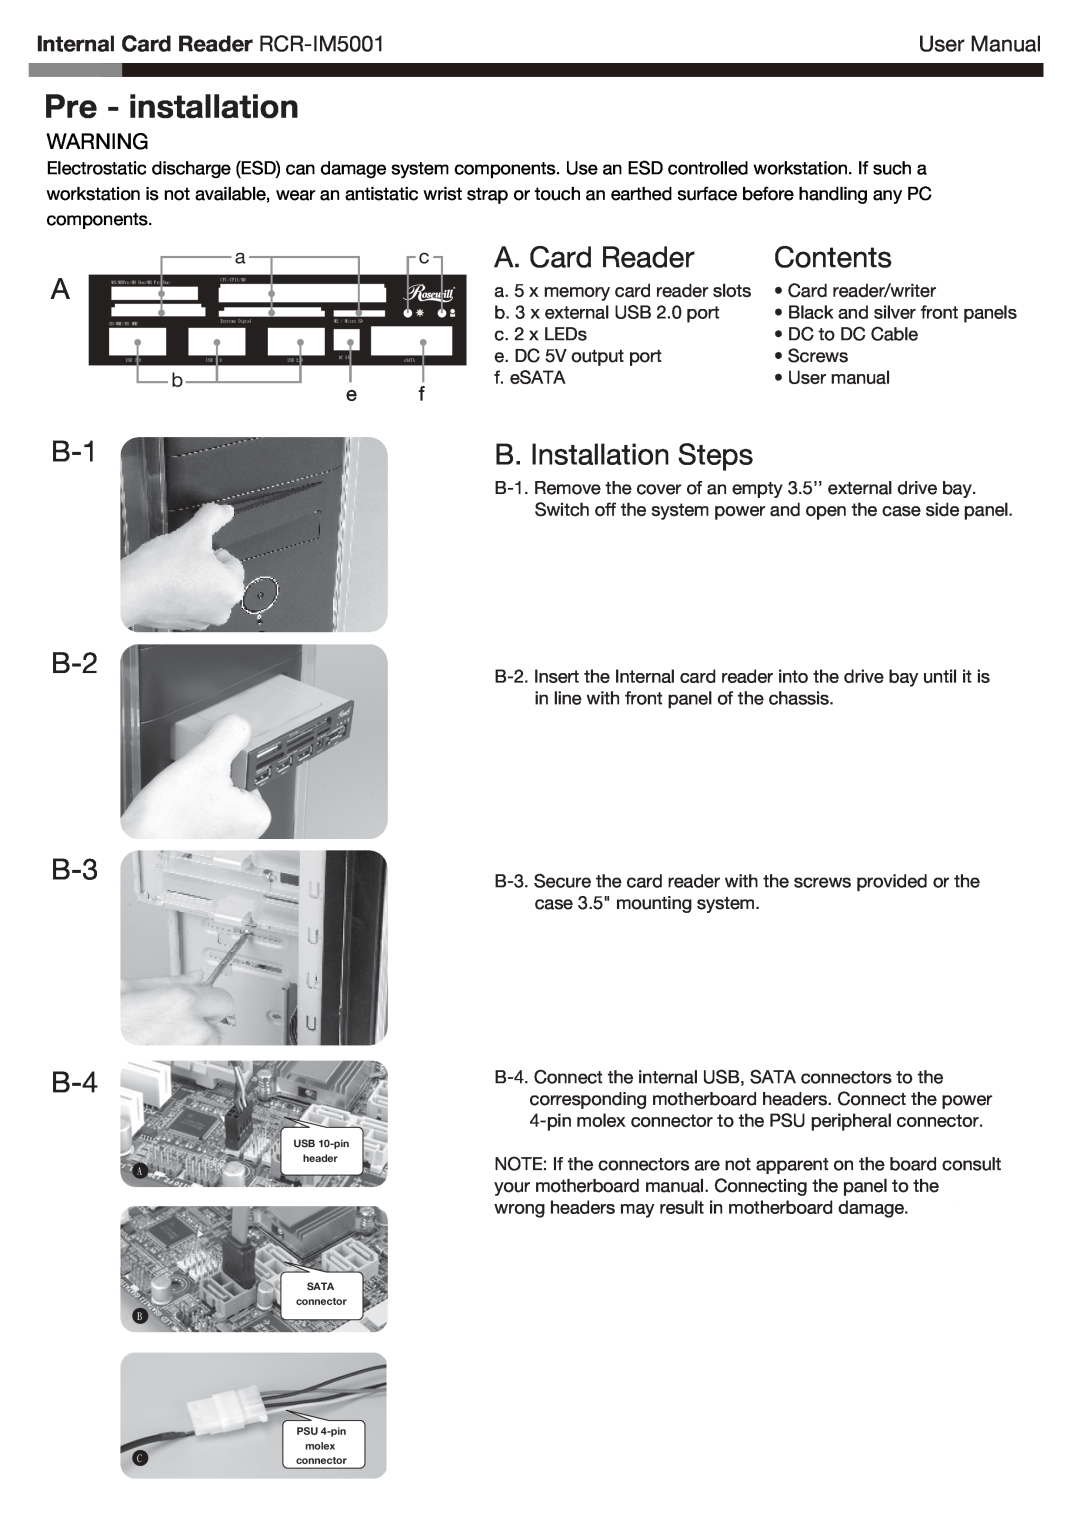 Rosewill RCR-IM5001 manual Pre - installation, A. Card Reader, Contents, B-1 B-2 B-3 B-4, B. Installation Steps 